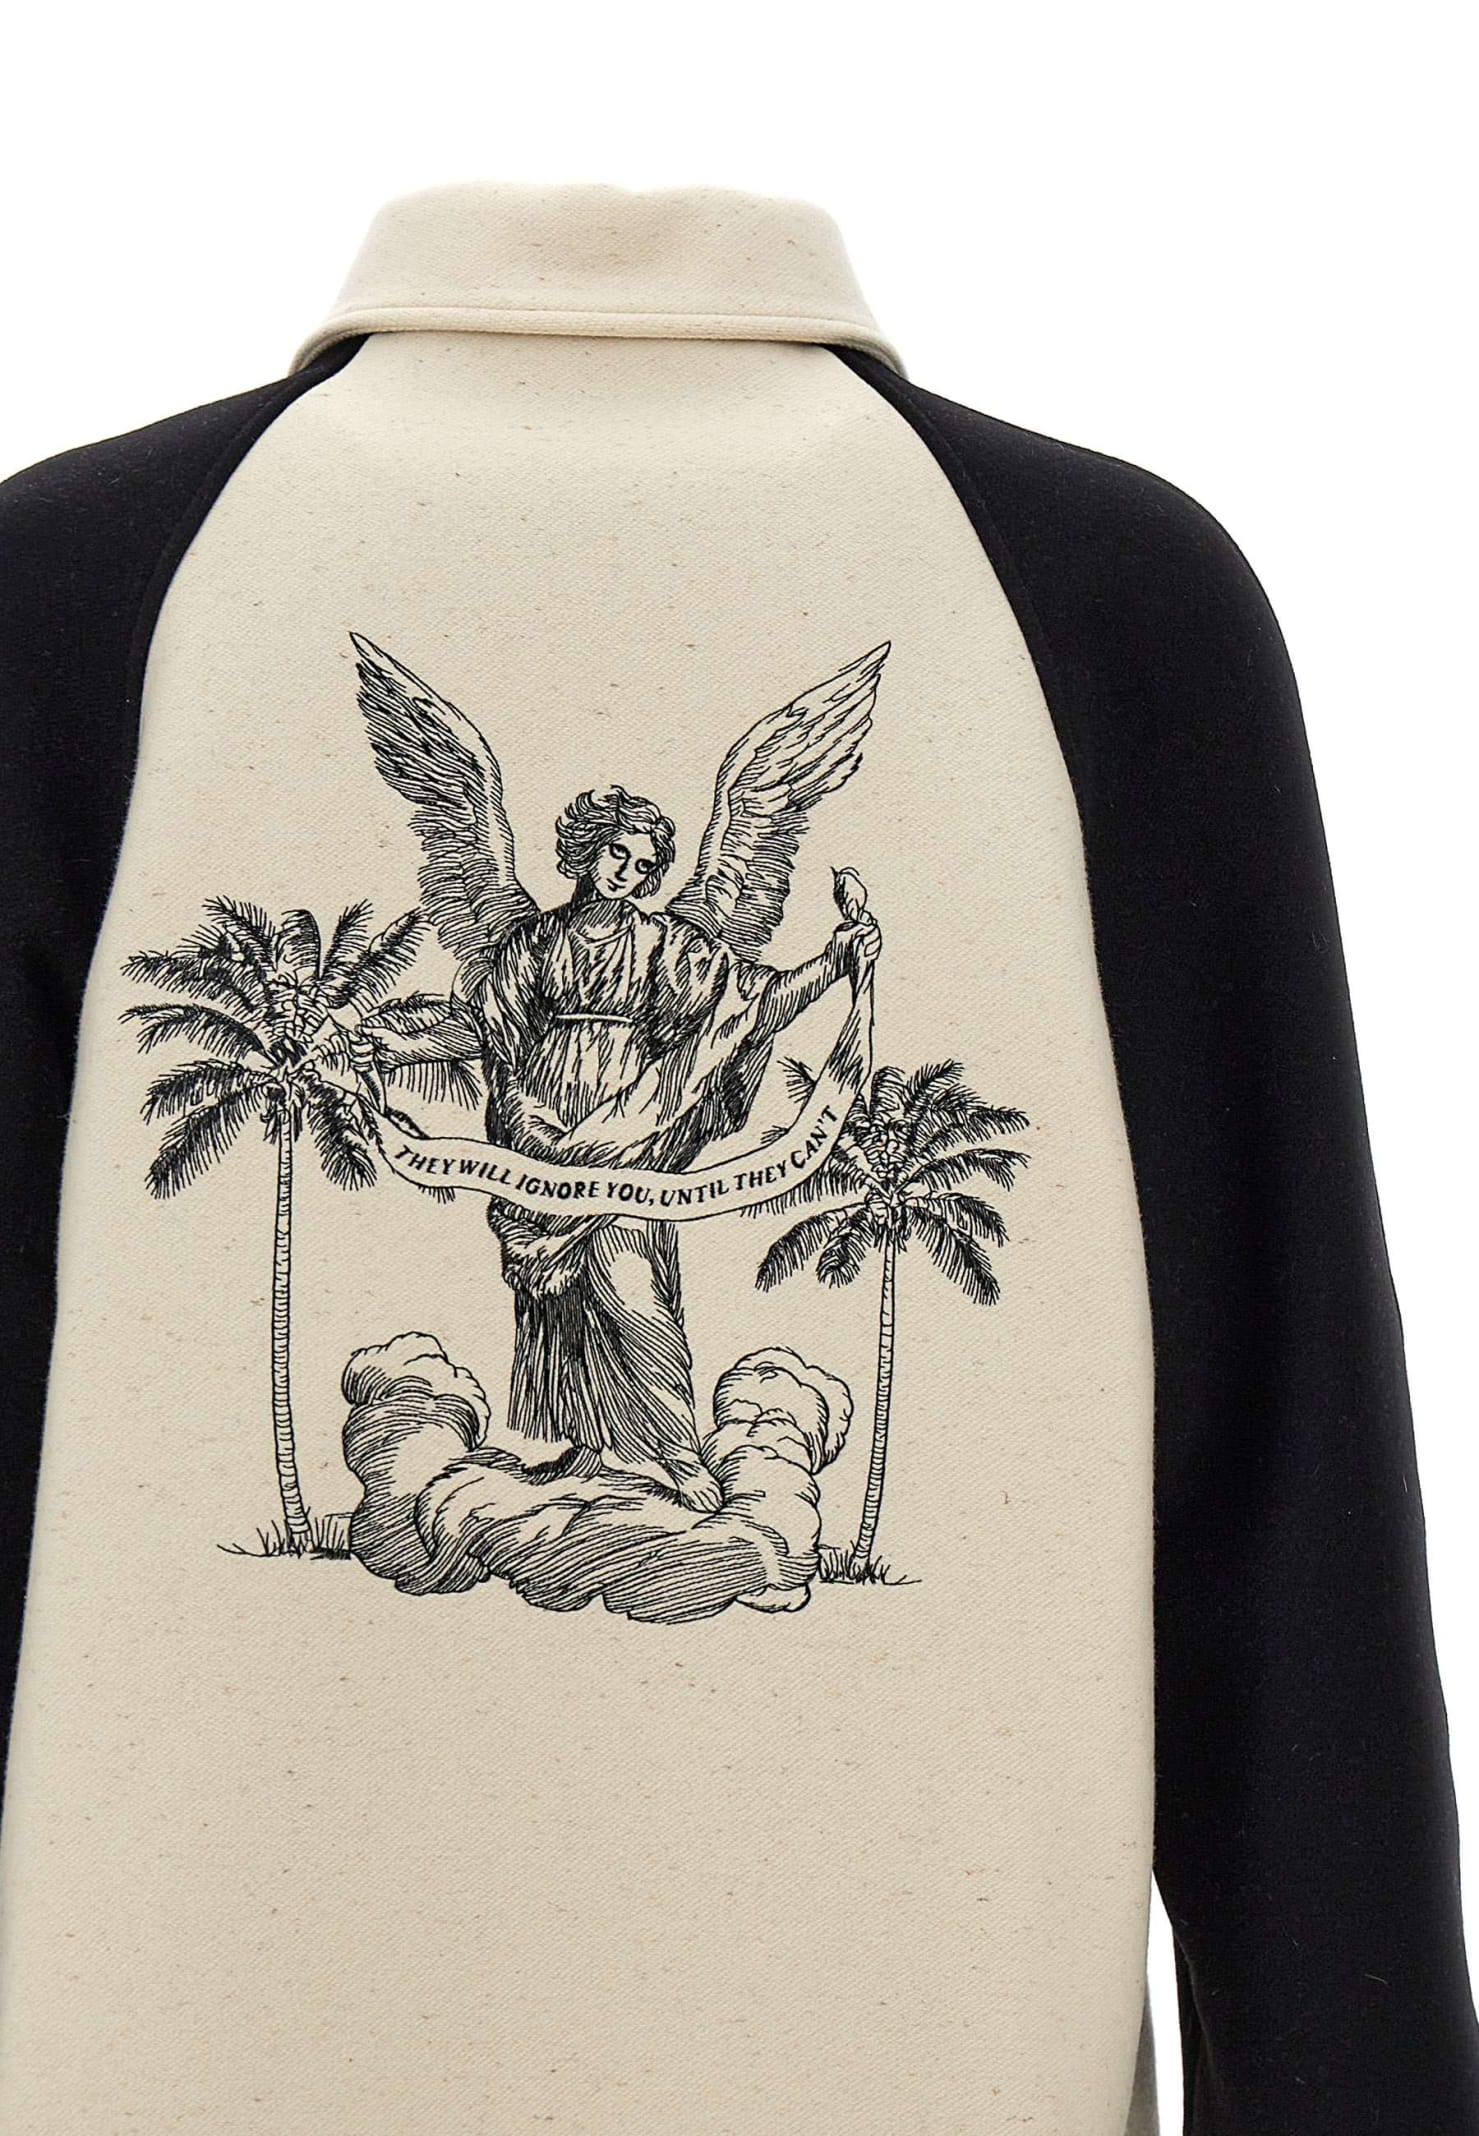 Shop Palm Angels University Wool Bomber Jacket In Butter Bla